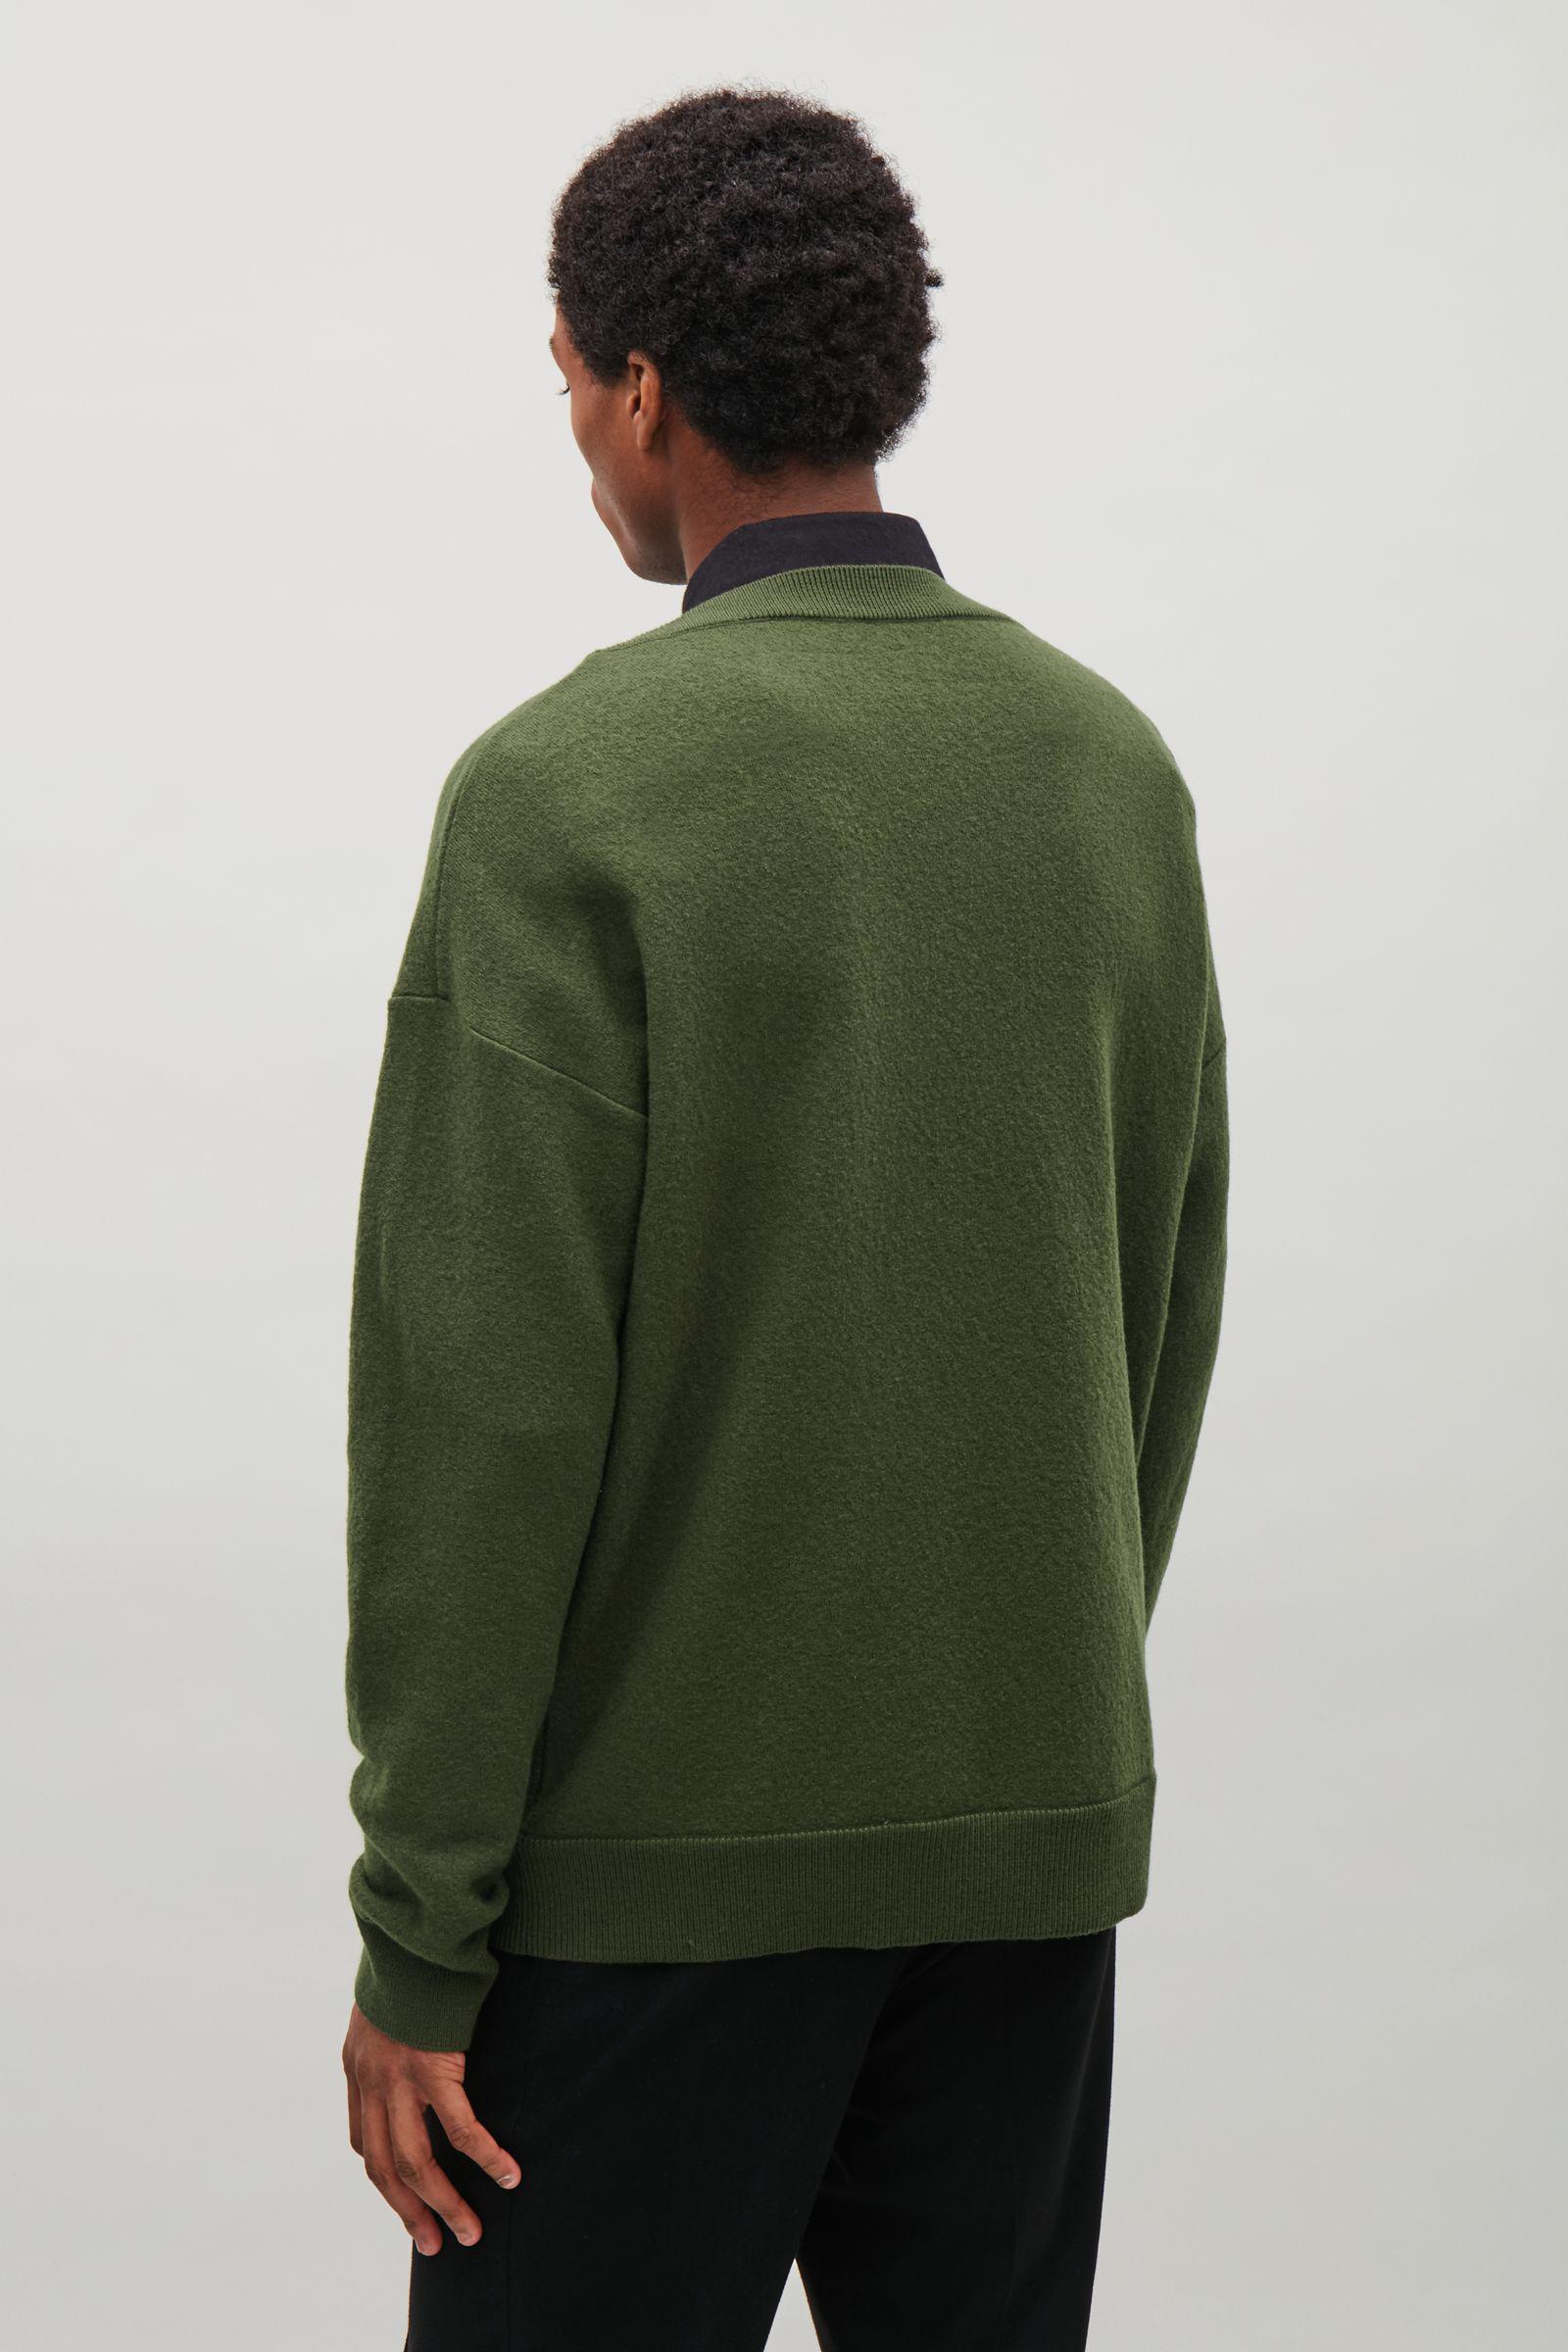 COS Oversized Boiled Wool Jumper in Green for Men - Lyst